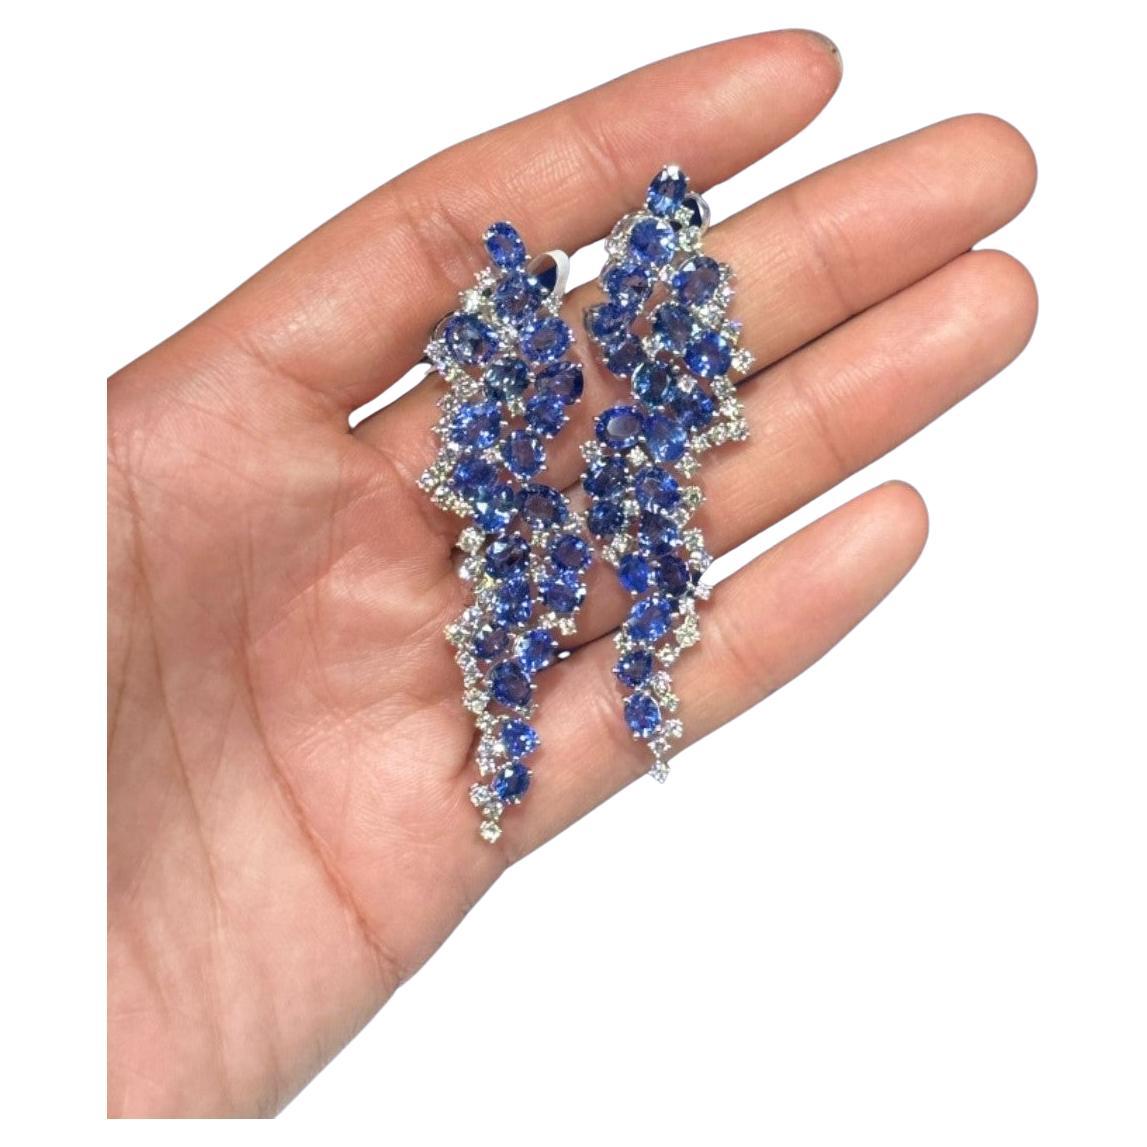 NWT $57, 000 Exquisite 18KT Gorgeous 30CT Fancy Blue Sapphire Diamond Earrings